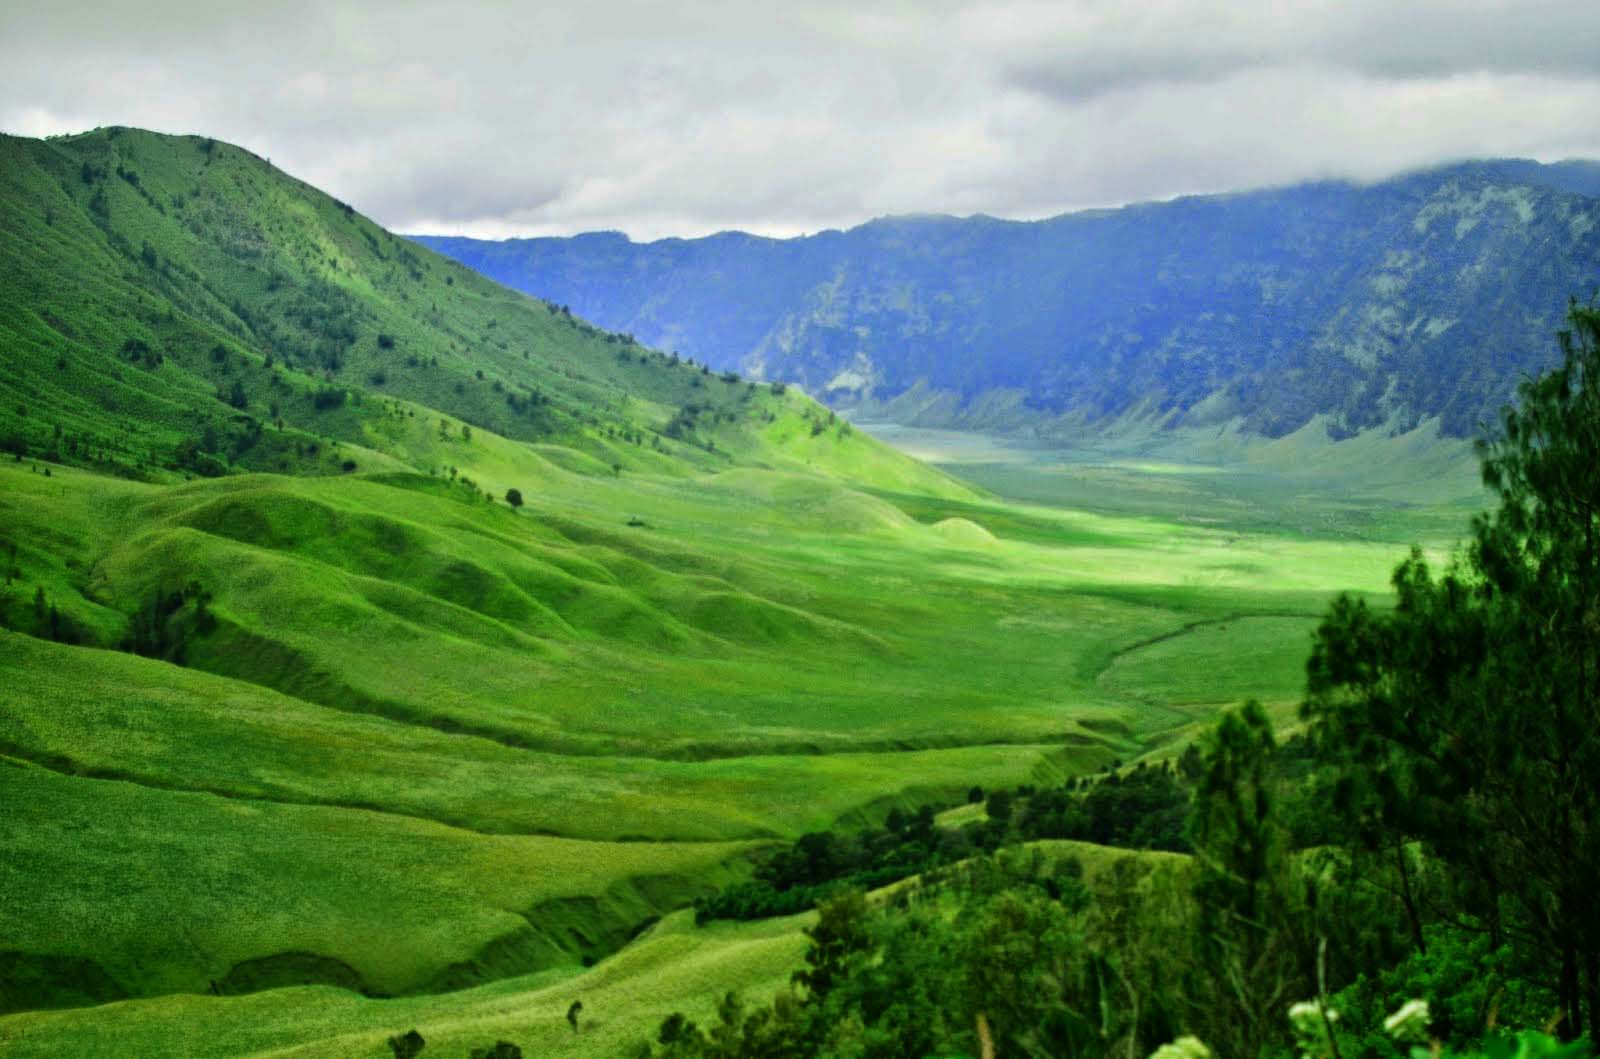 The beautiful green Savanna Valley of Mount Bromo